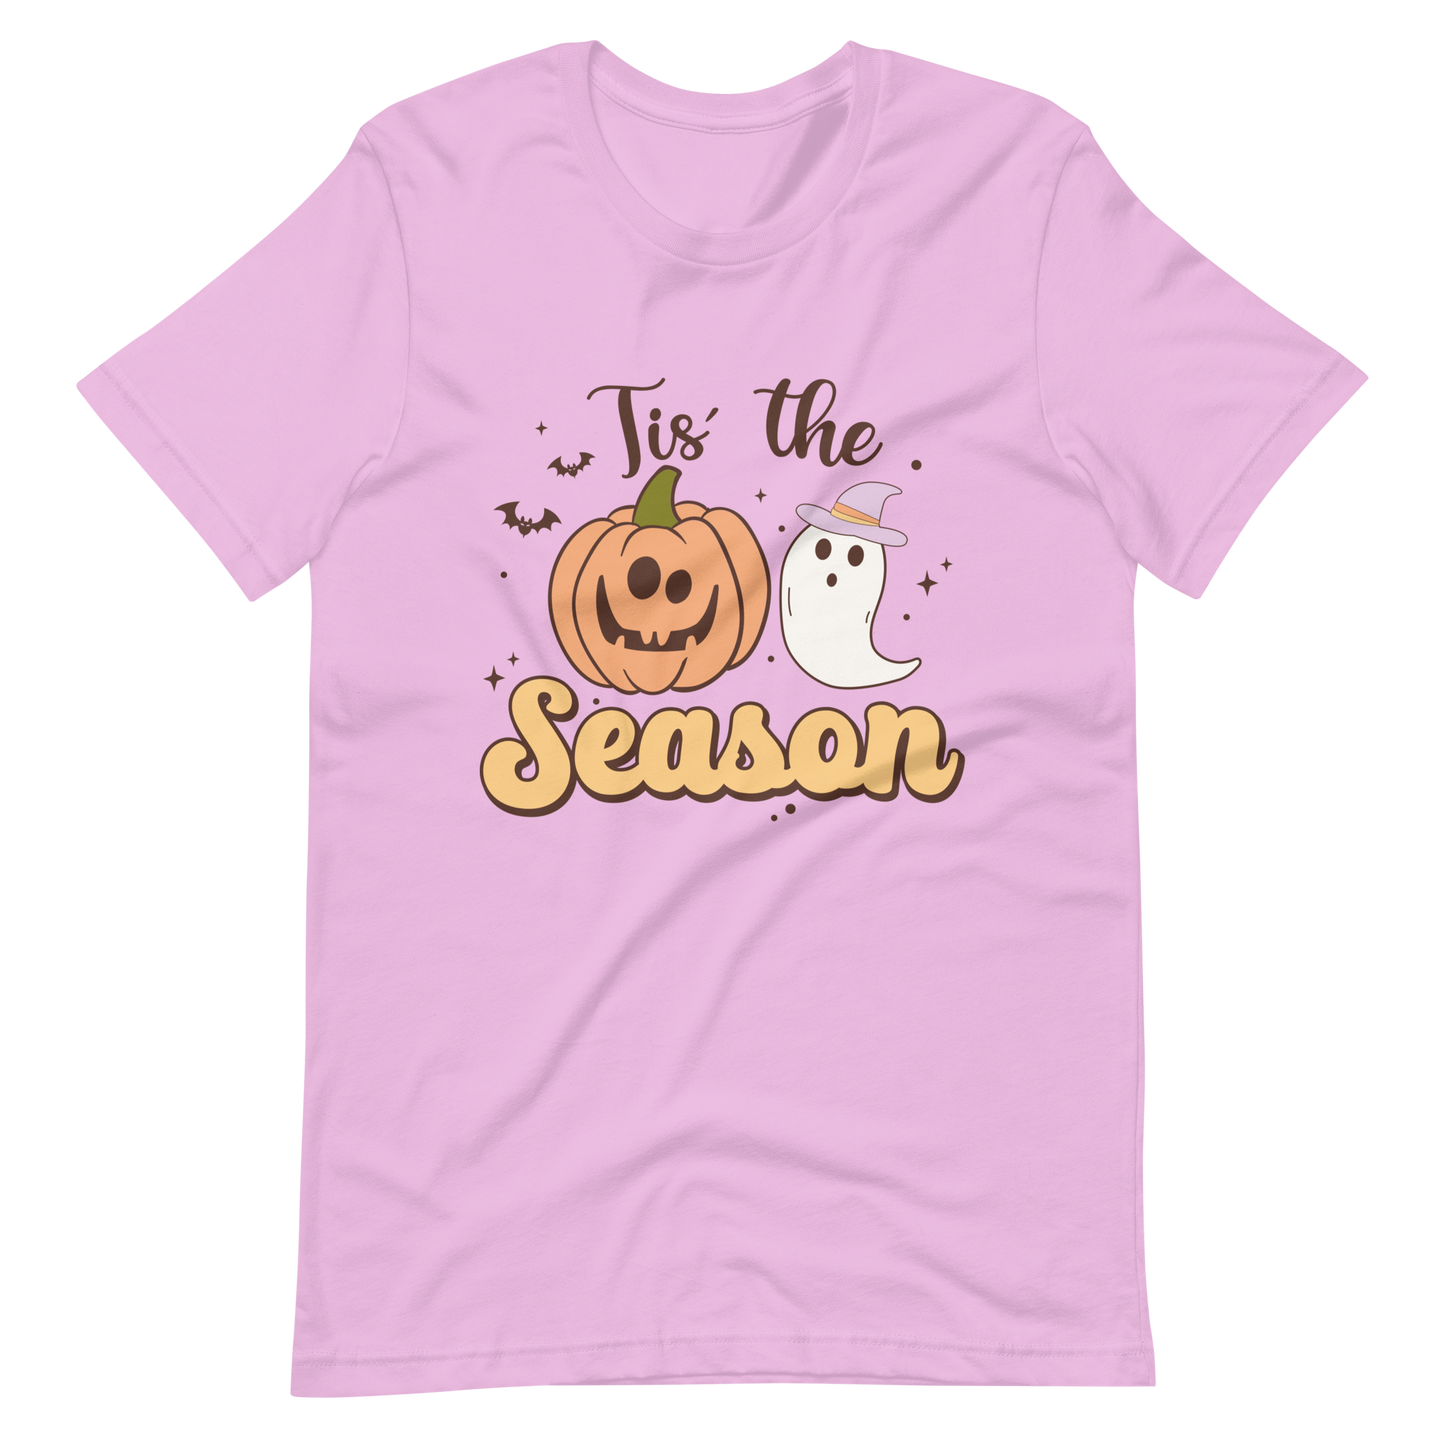 Tis the season | Unisex T-shirt